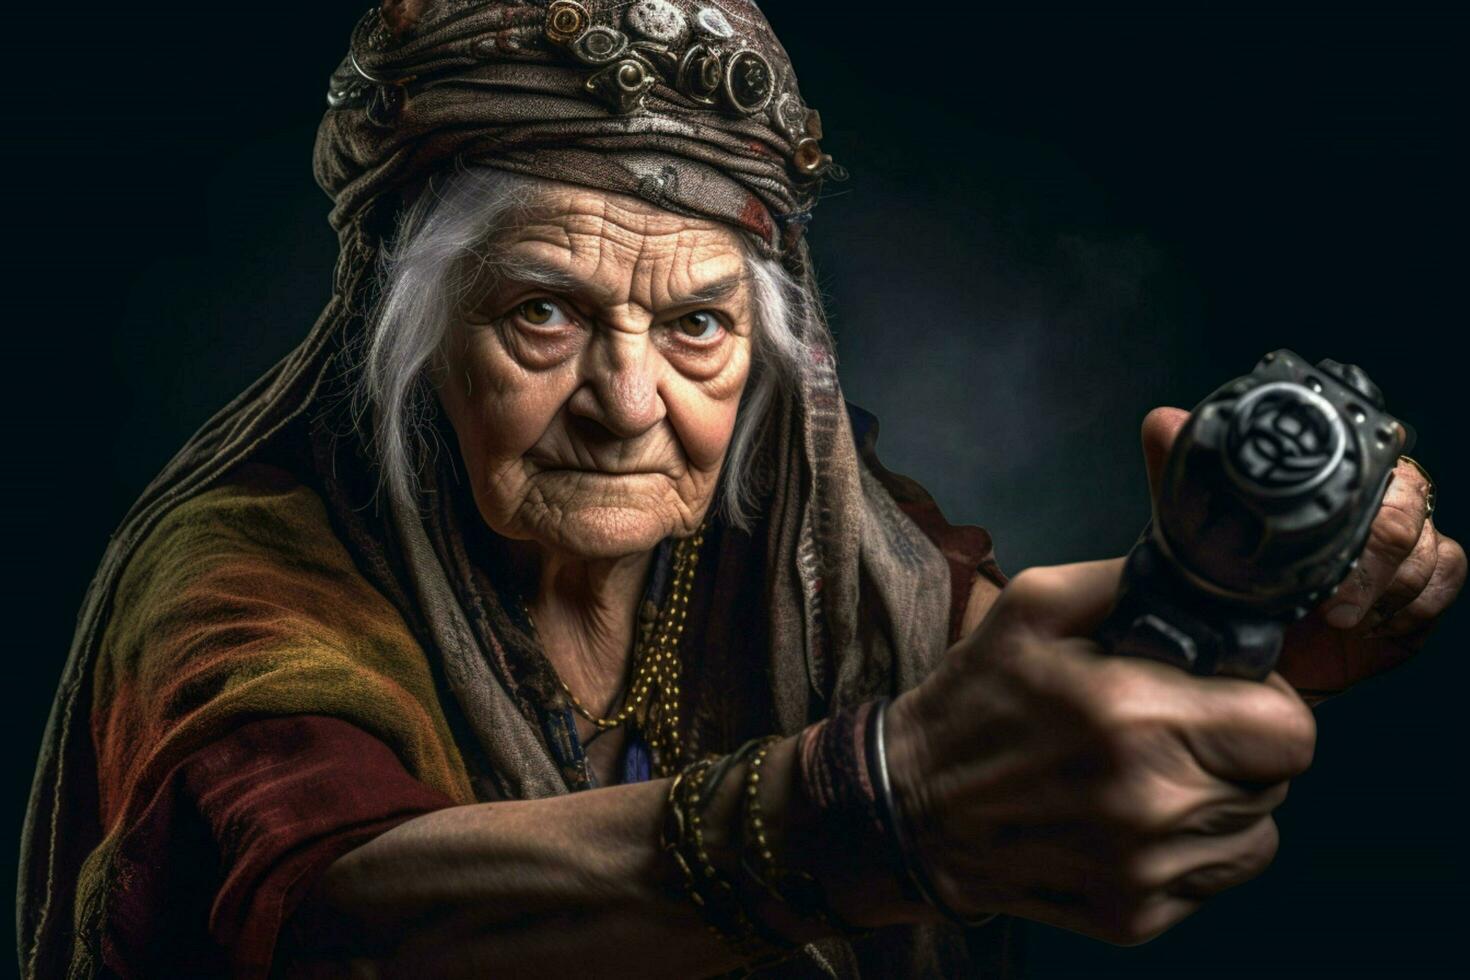 warrior senior woman gaming fictional world photo